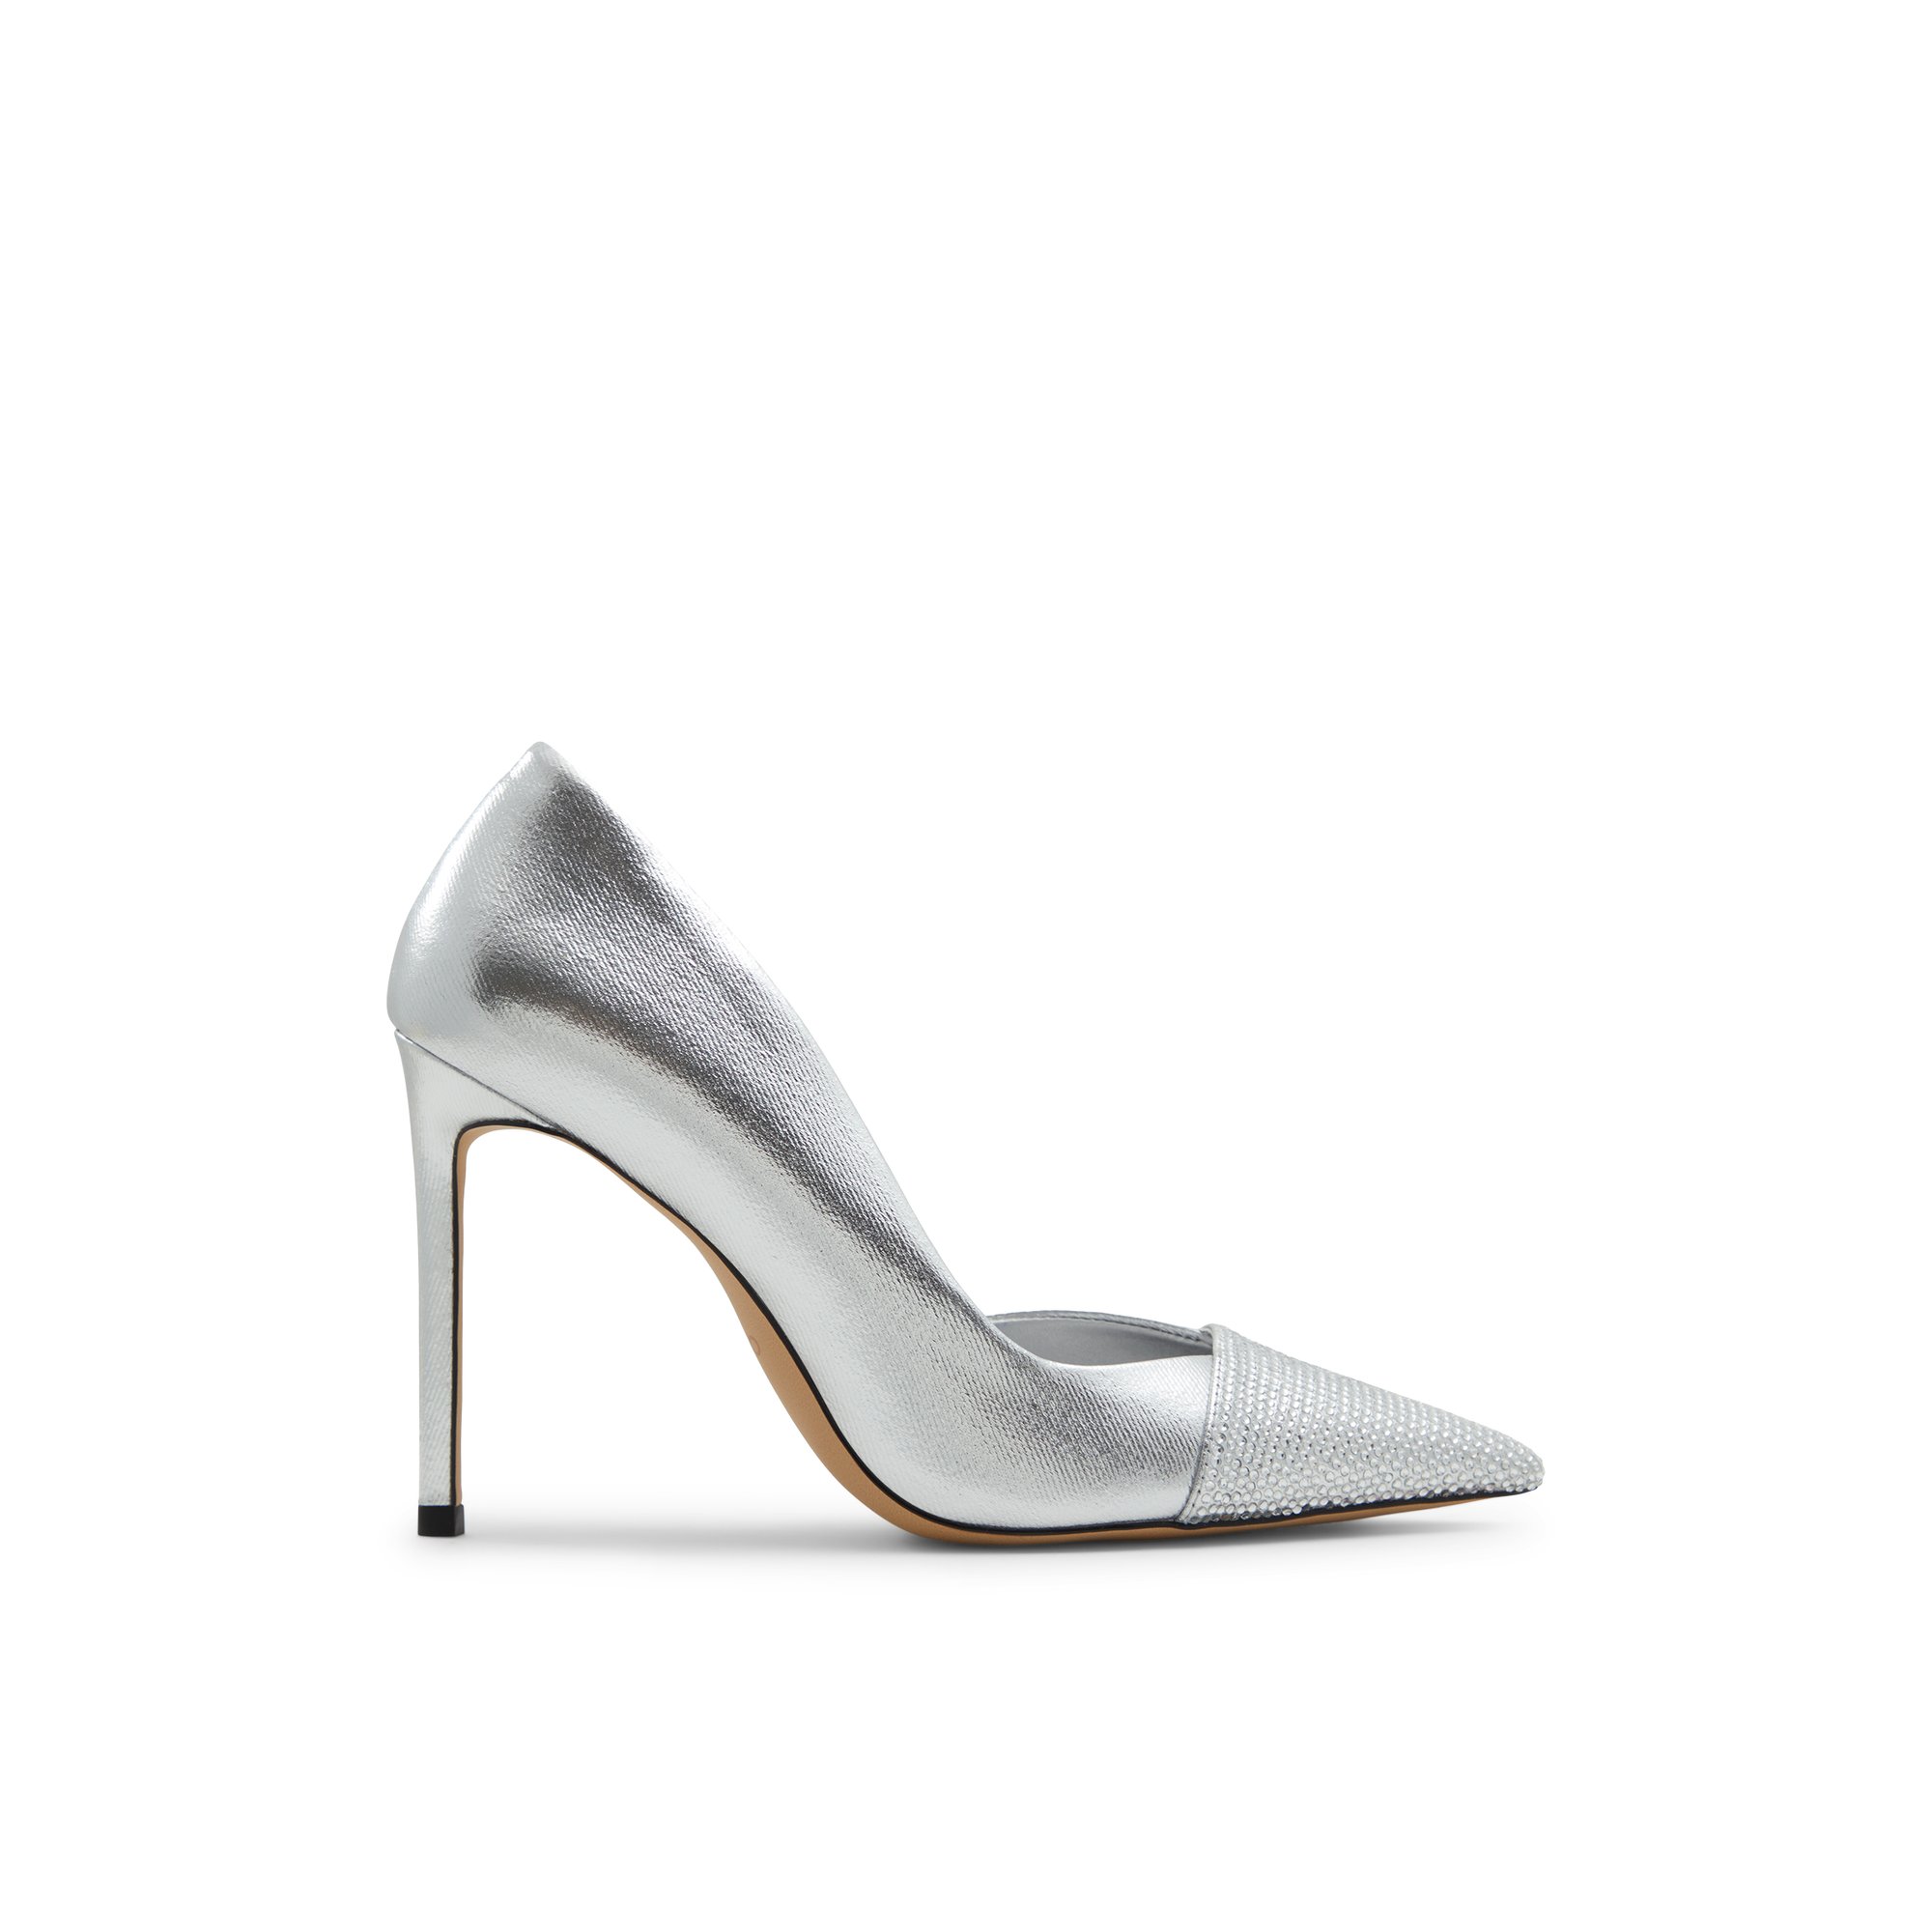 ALDO Mazy - Women's High Heel - Silver